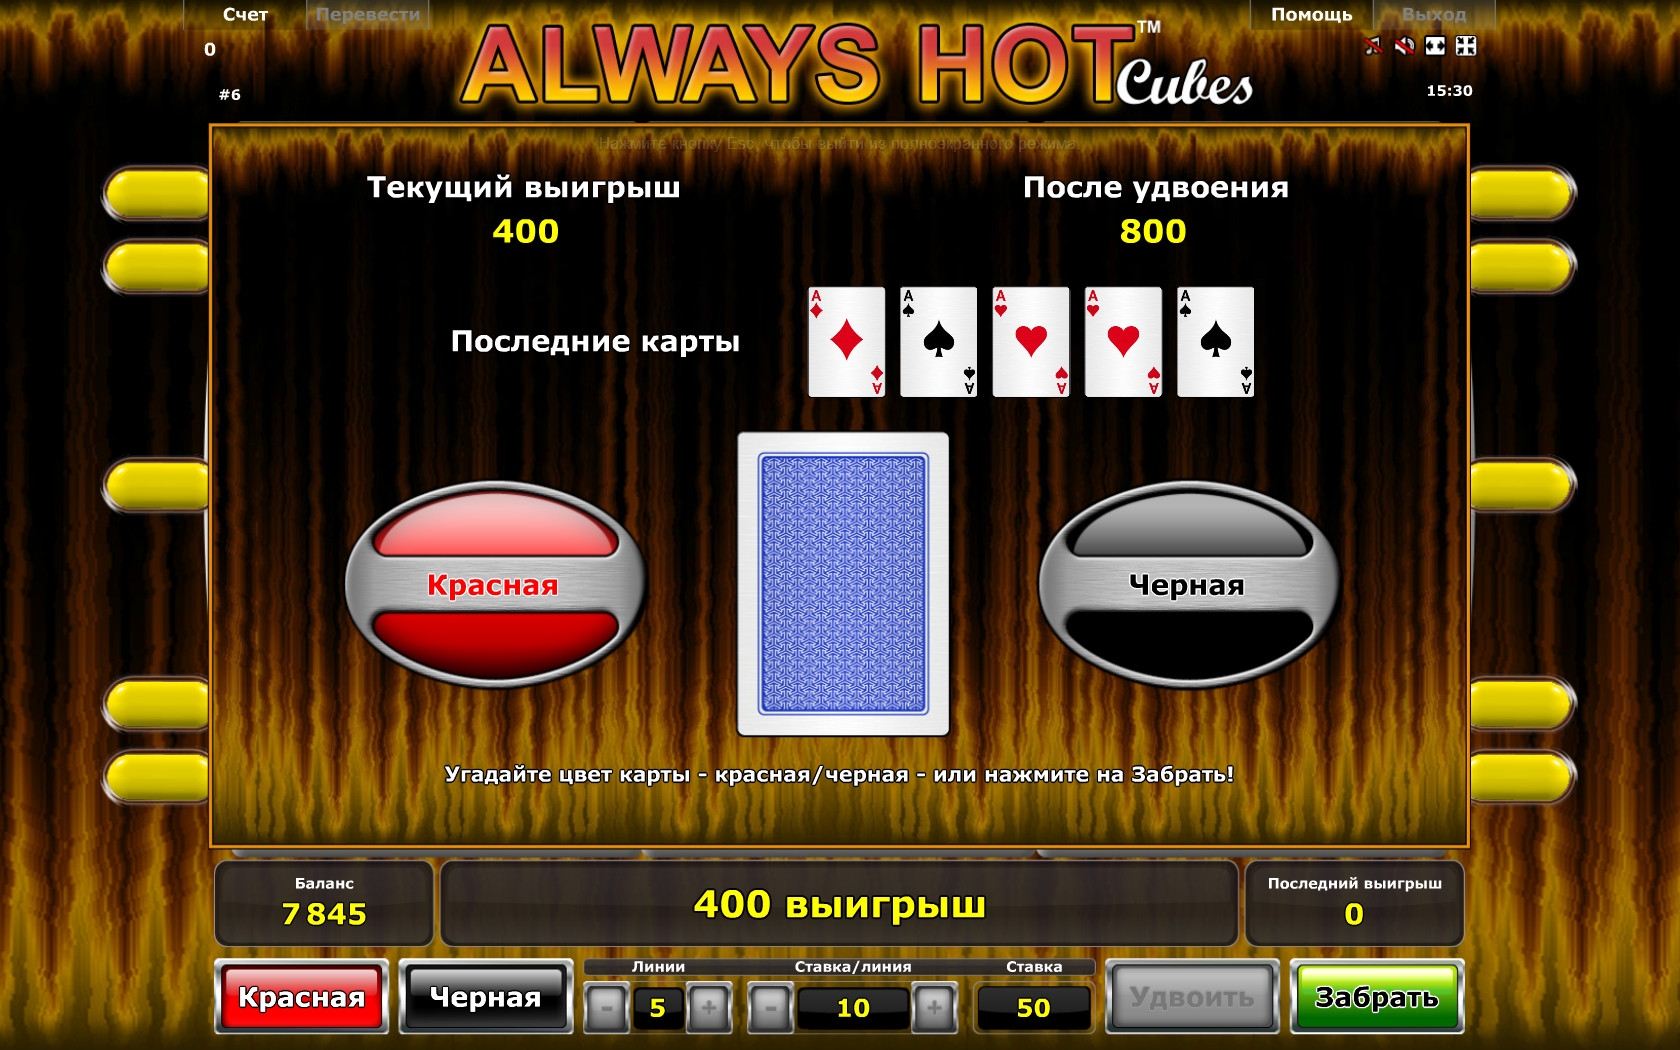 always hot cubes slot machines online with bonus